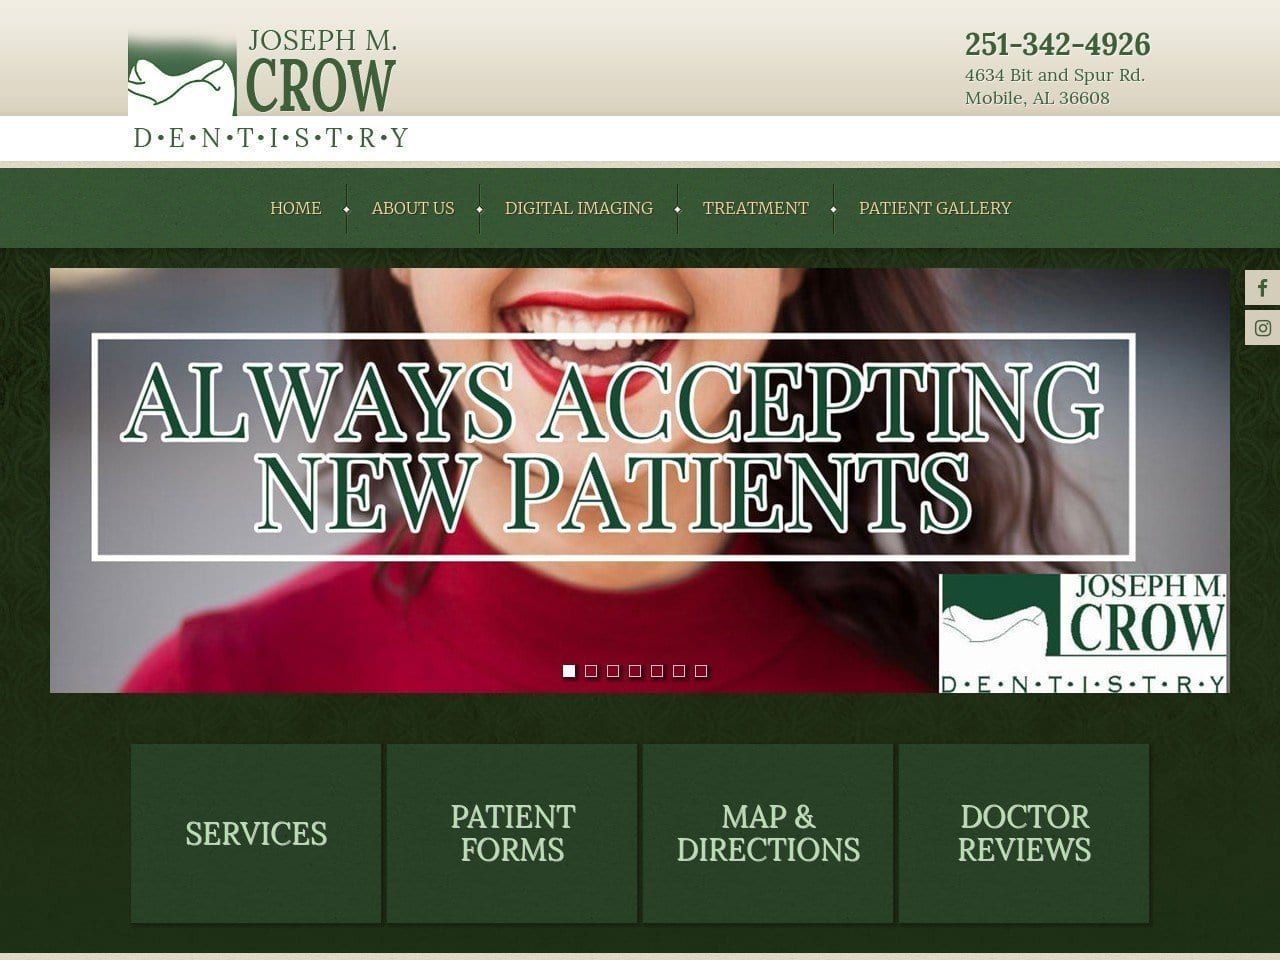 Joseph M. Crow D.M.D. P.C. Website Screenshot from joecrowdentistry.com